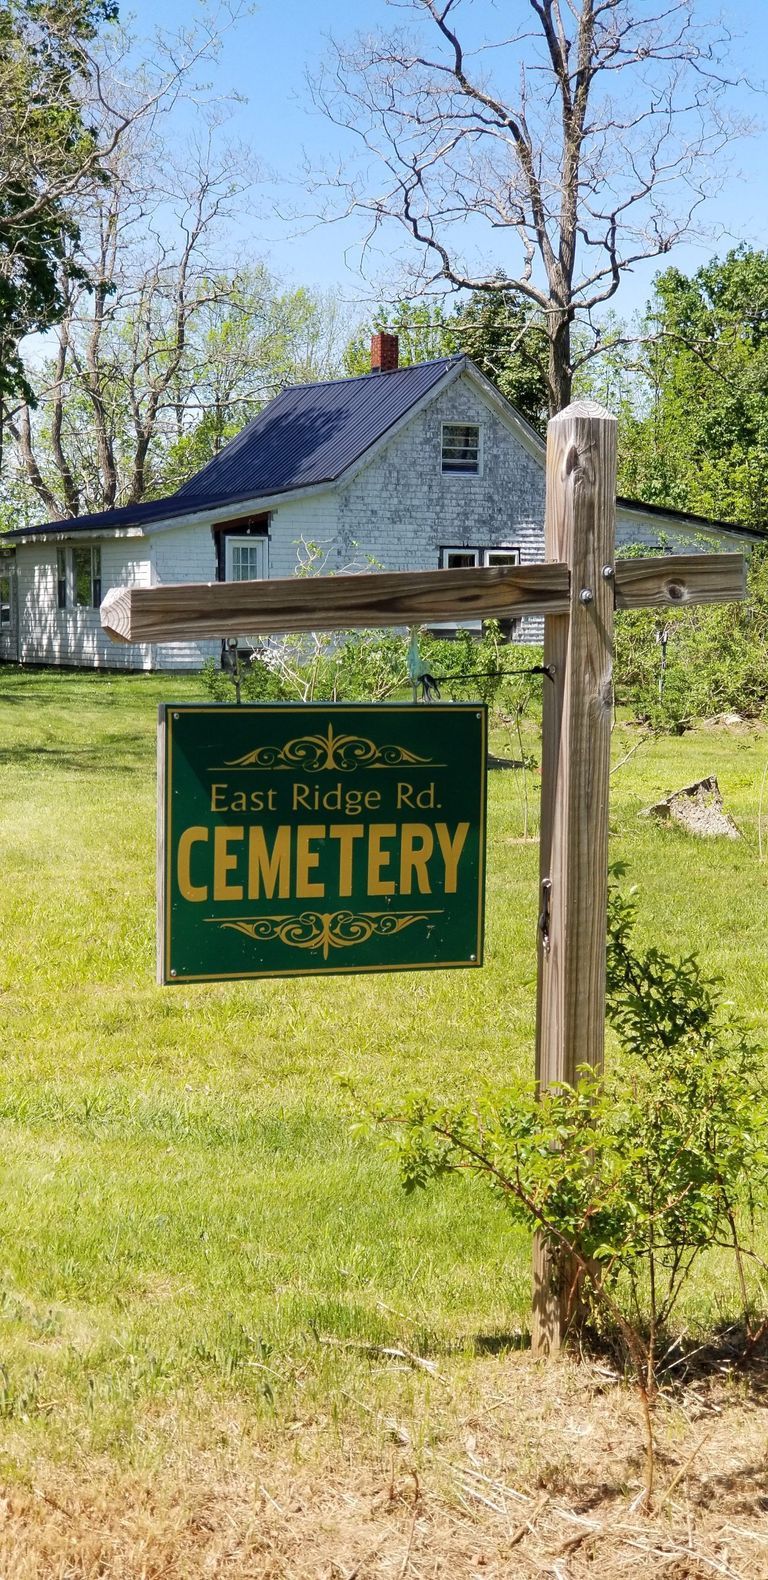          East Ridge Cemetery, Cathance Township, Maine
   